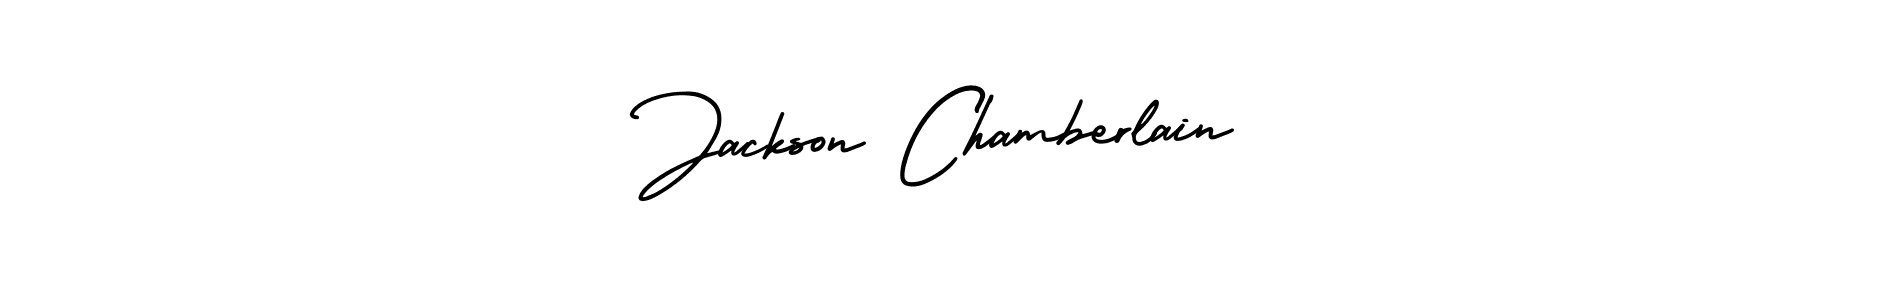 72+ Jackson Chamberlain Name Signature Style Ideas | Outstanding eSign